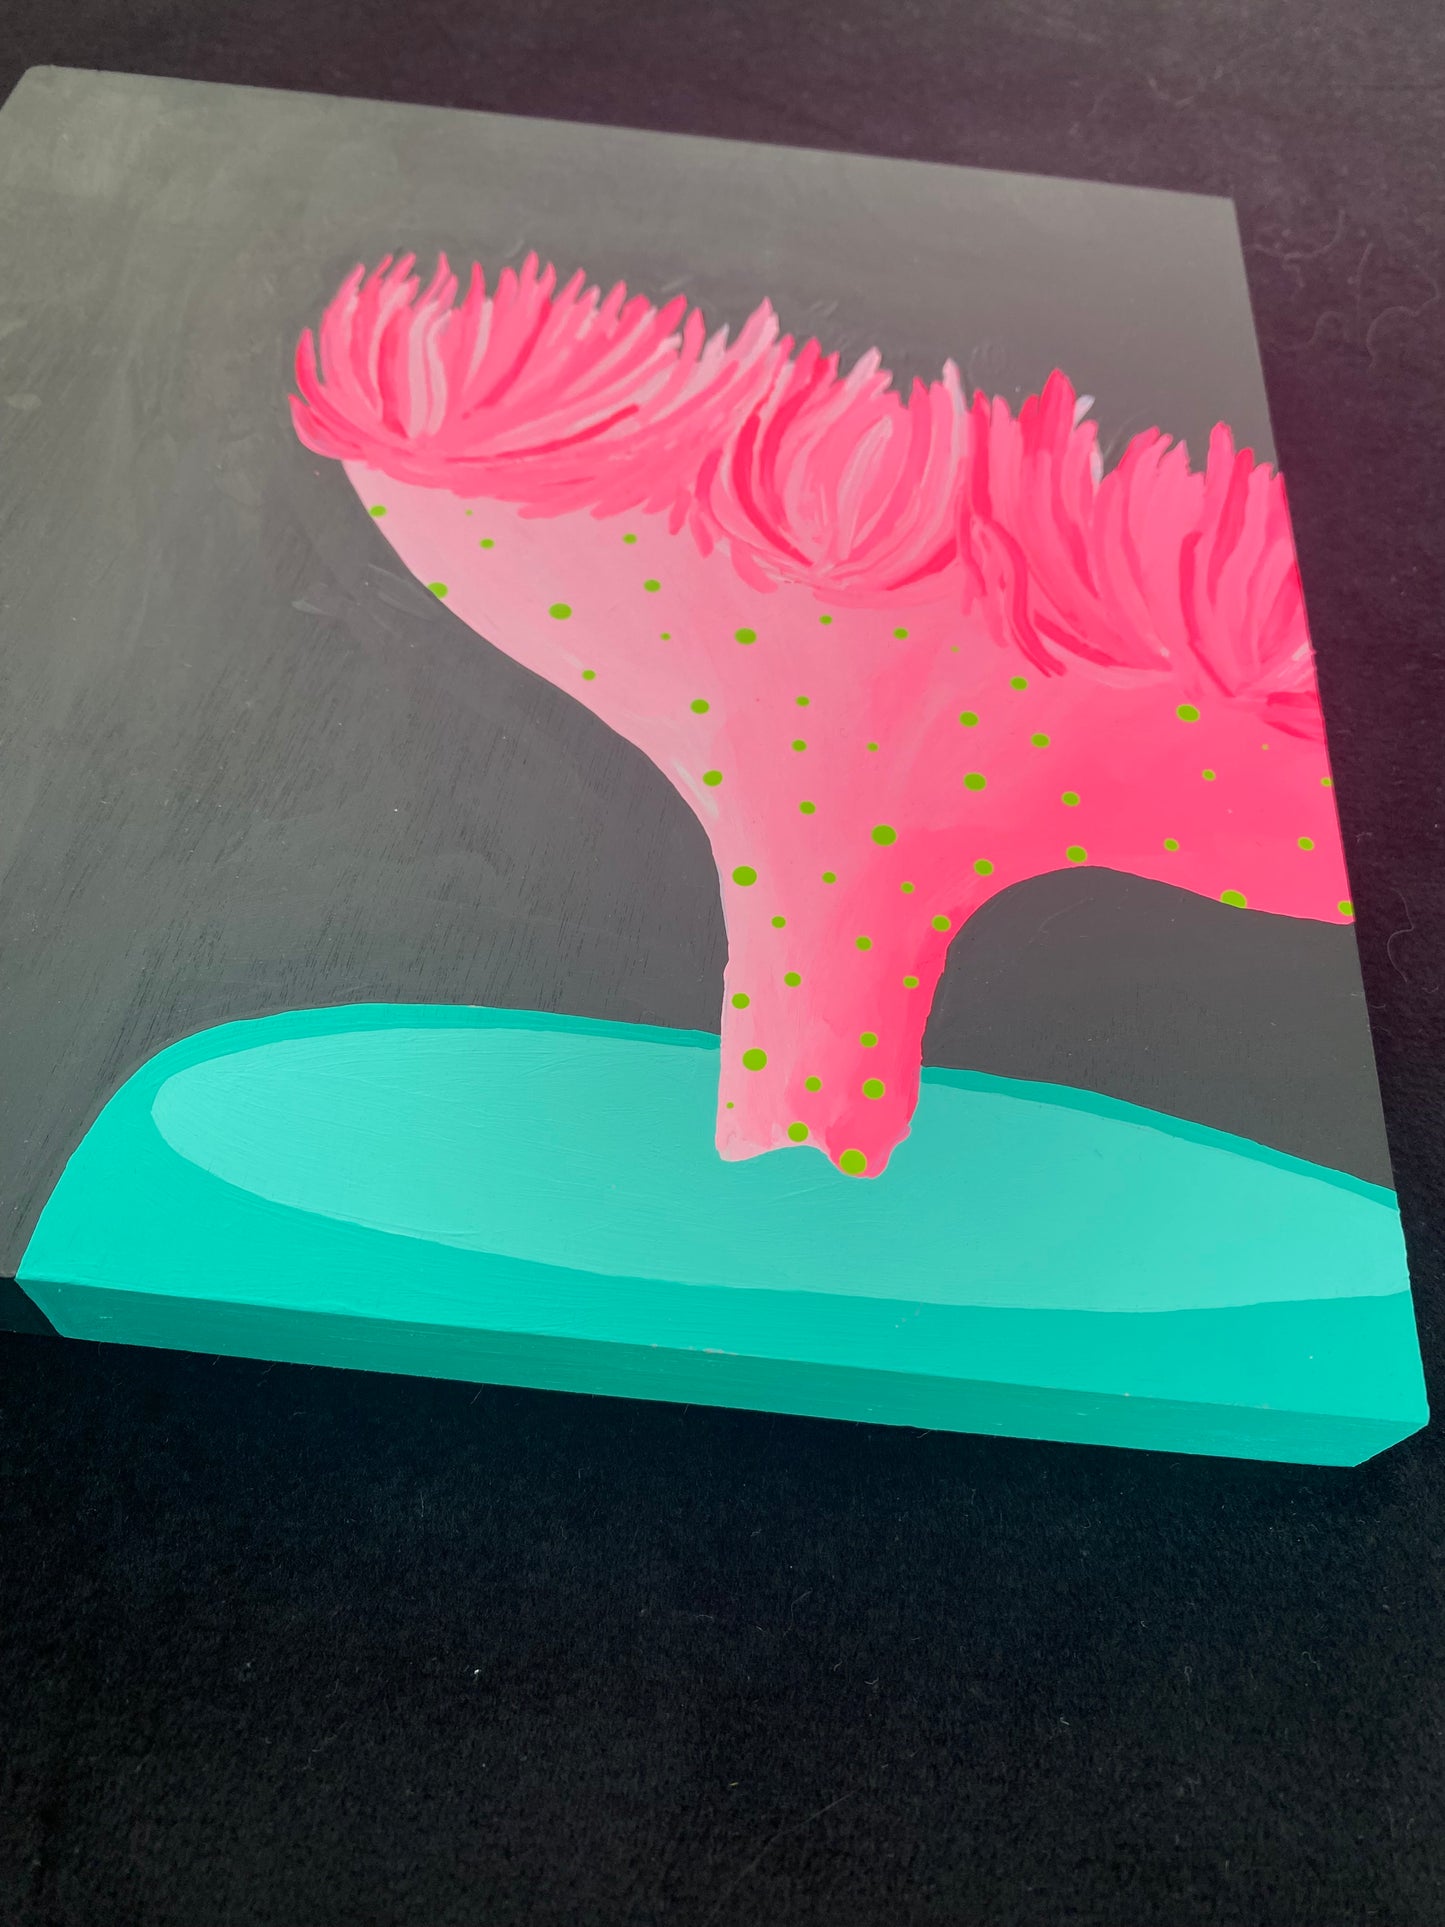 Painting Pink Mermaid Tail Cactus